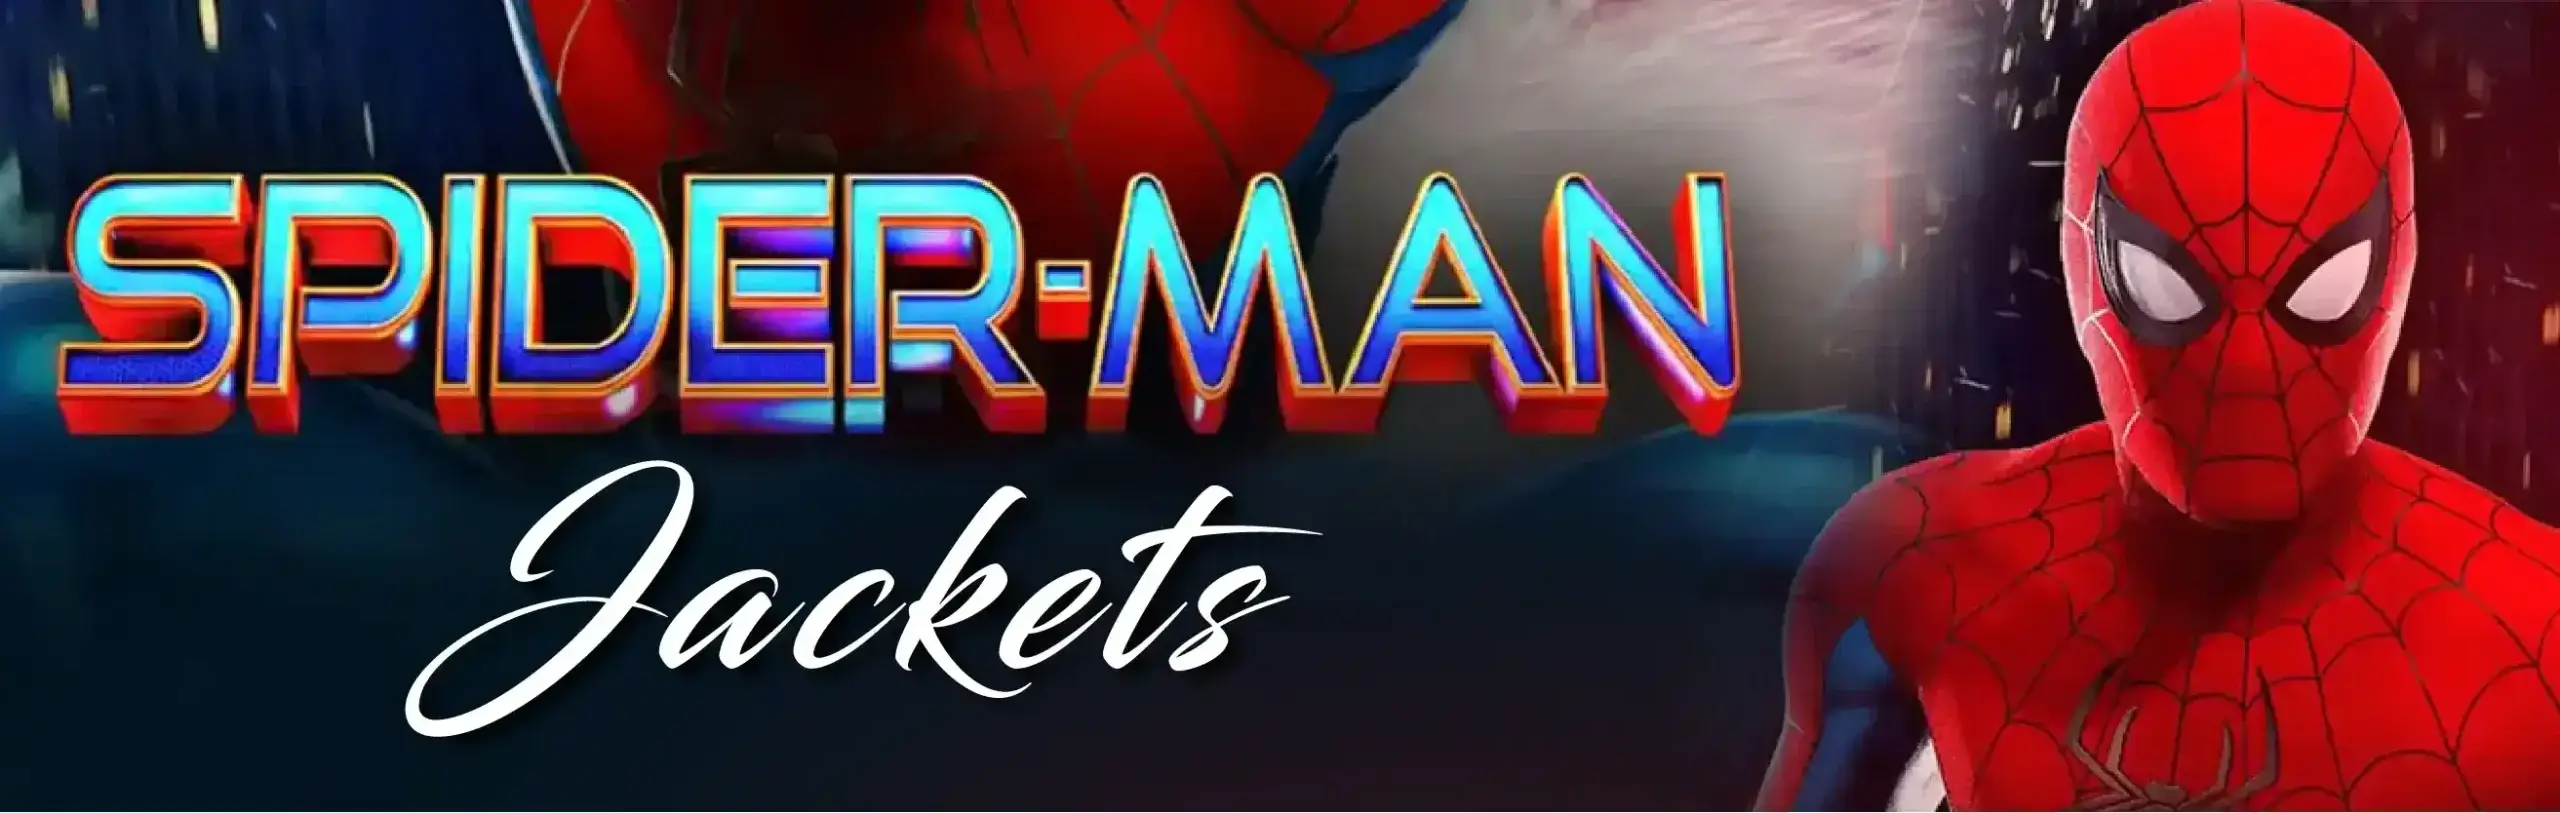 Spiderman Jackets